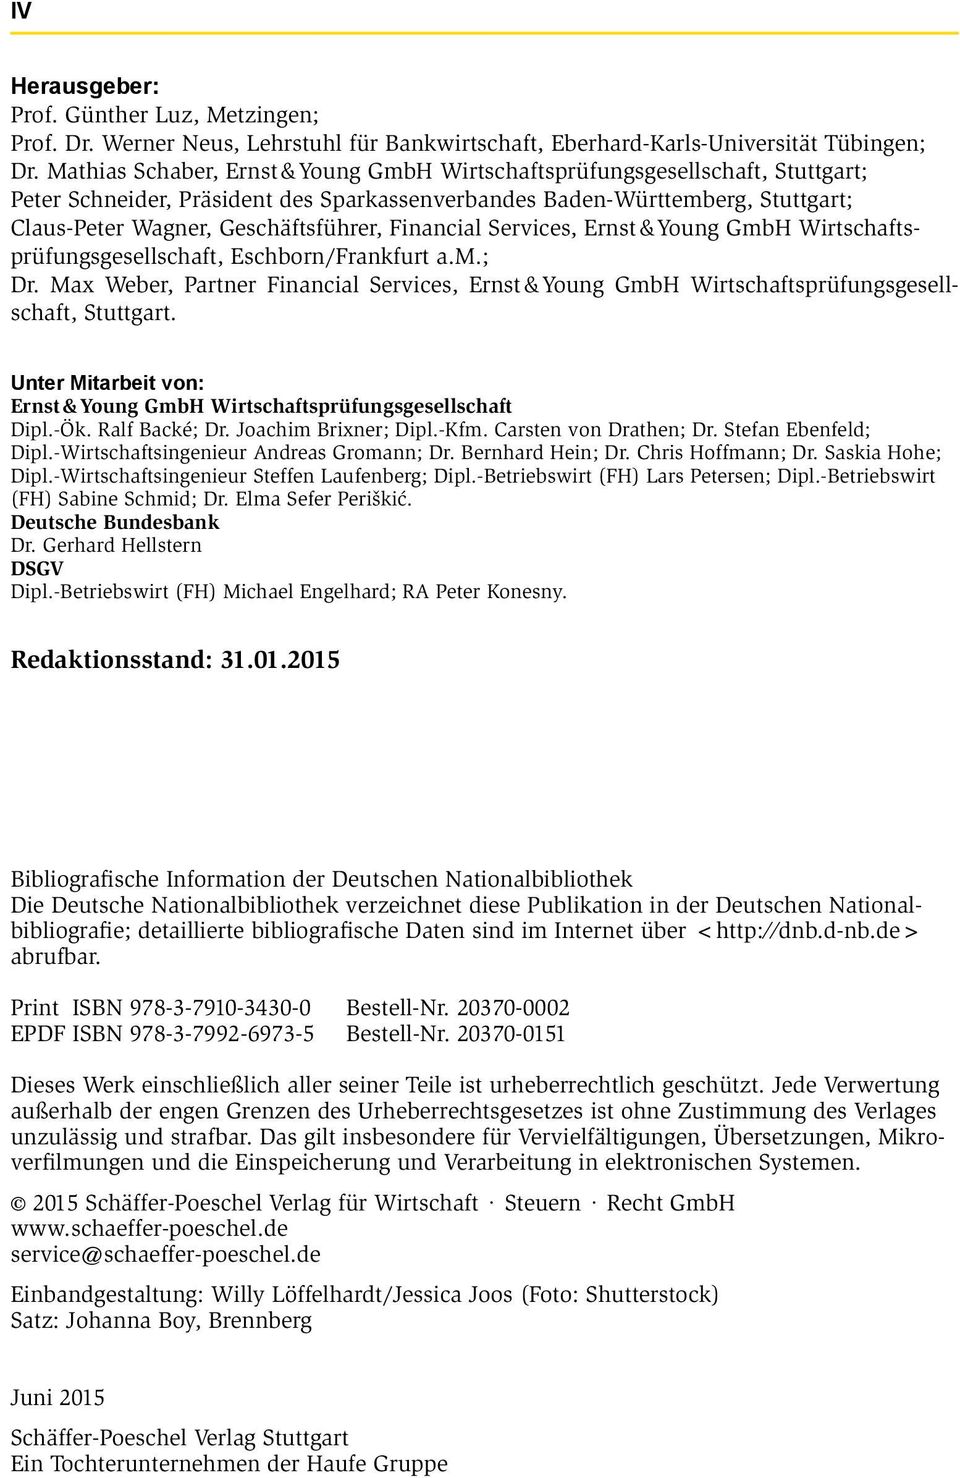 Financial Services, Ernst & Young GmbH Wirtschaftsprüfungsgesellschaft, Eschborn/Frankfurt a.m.; Dr.